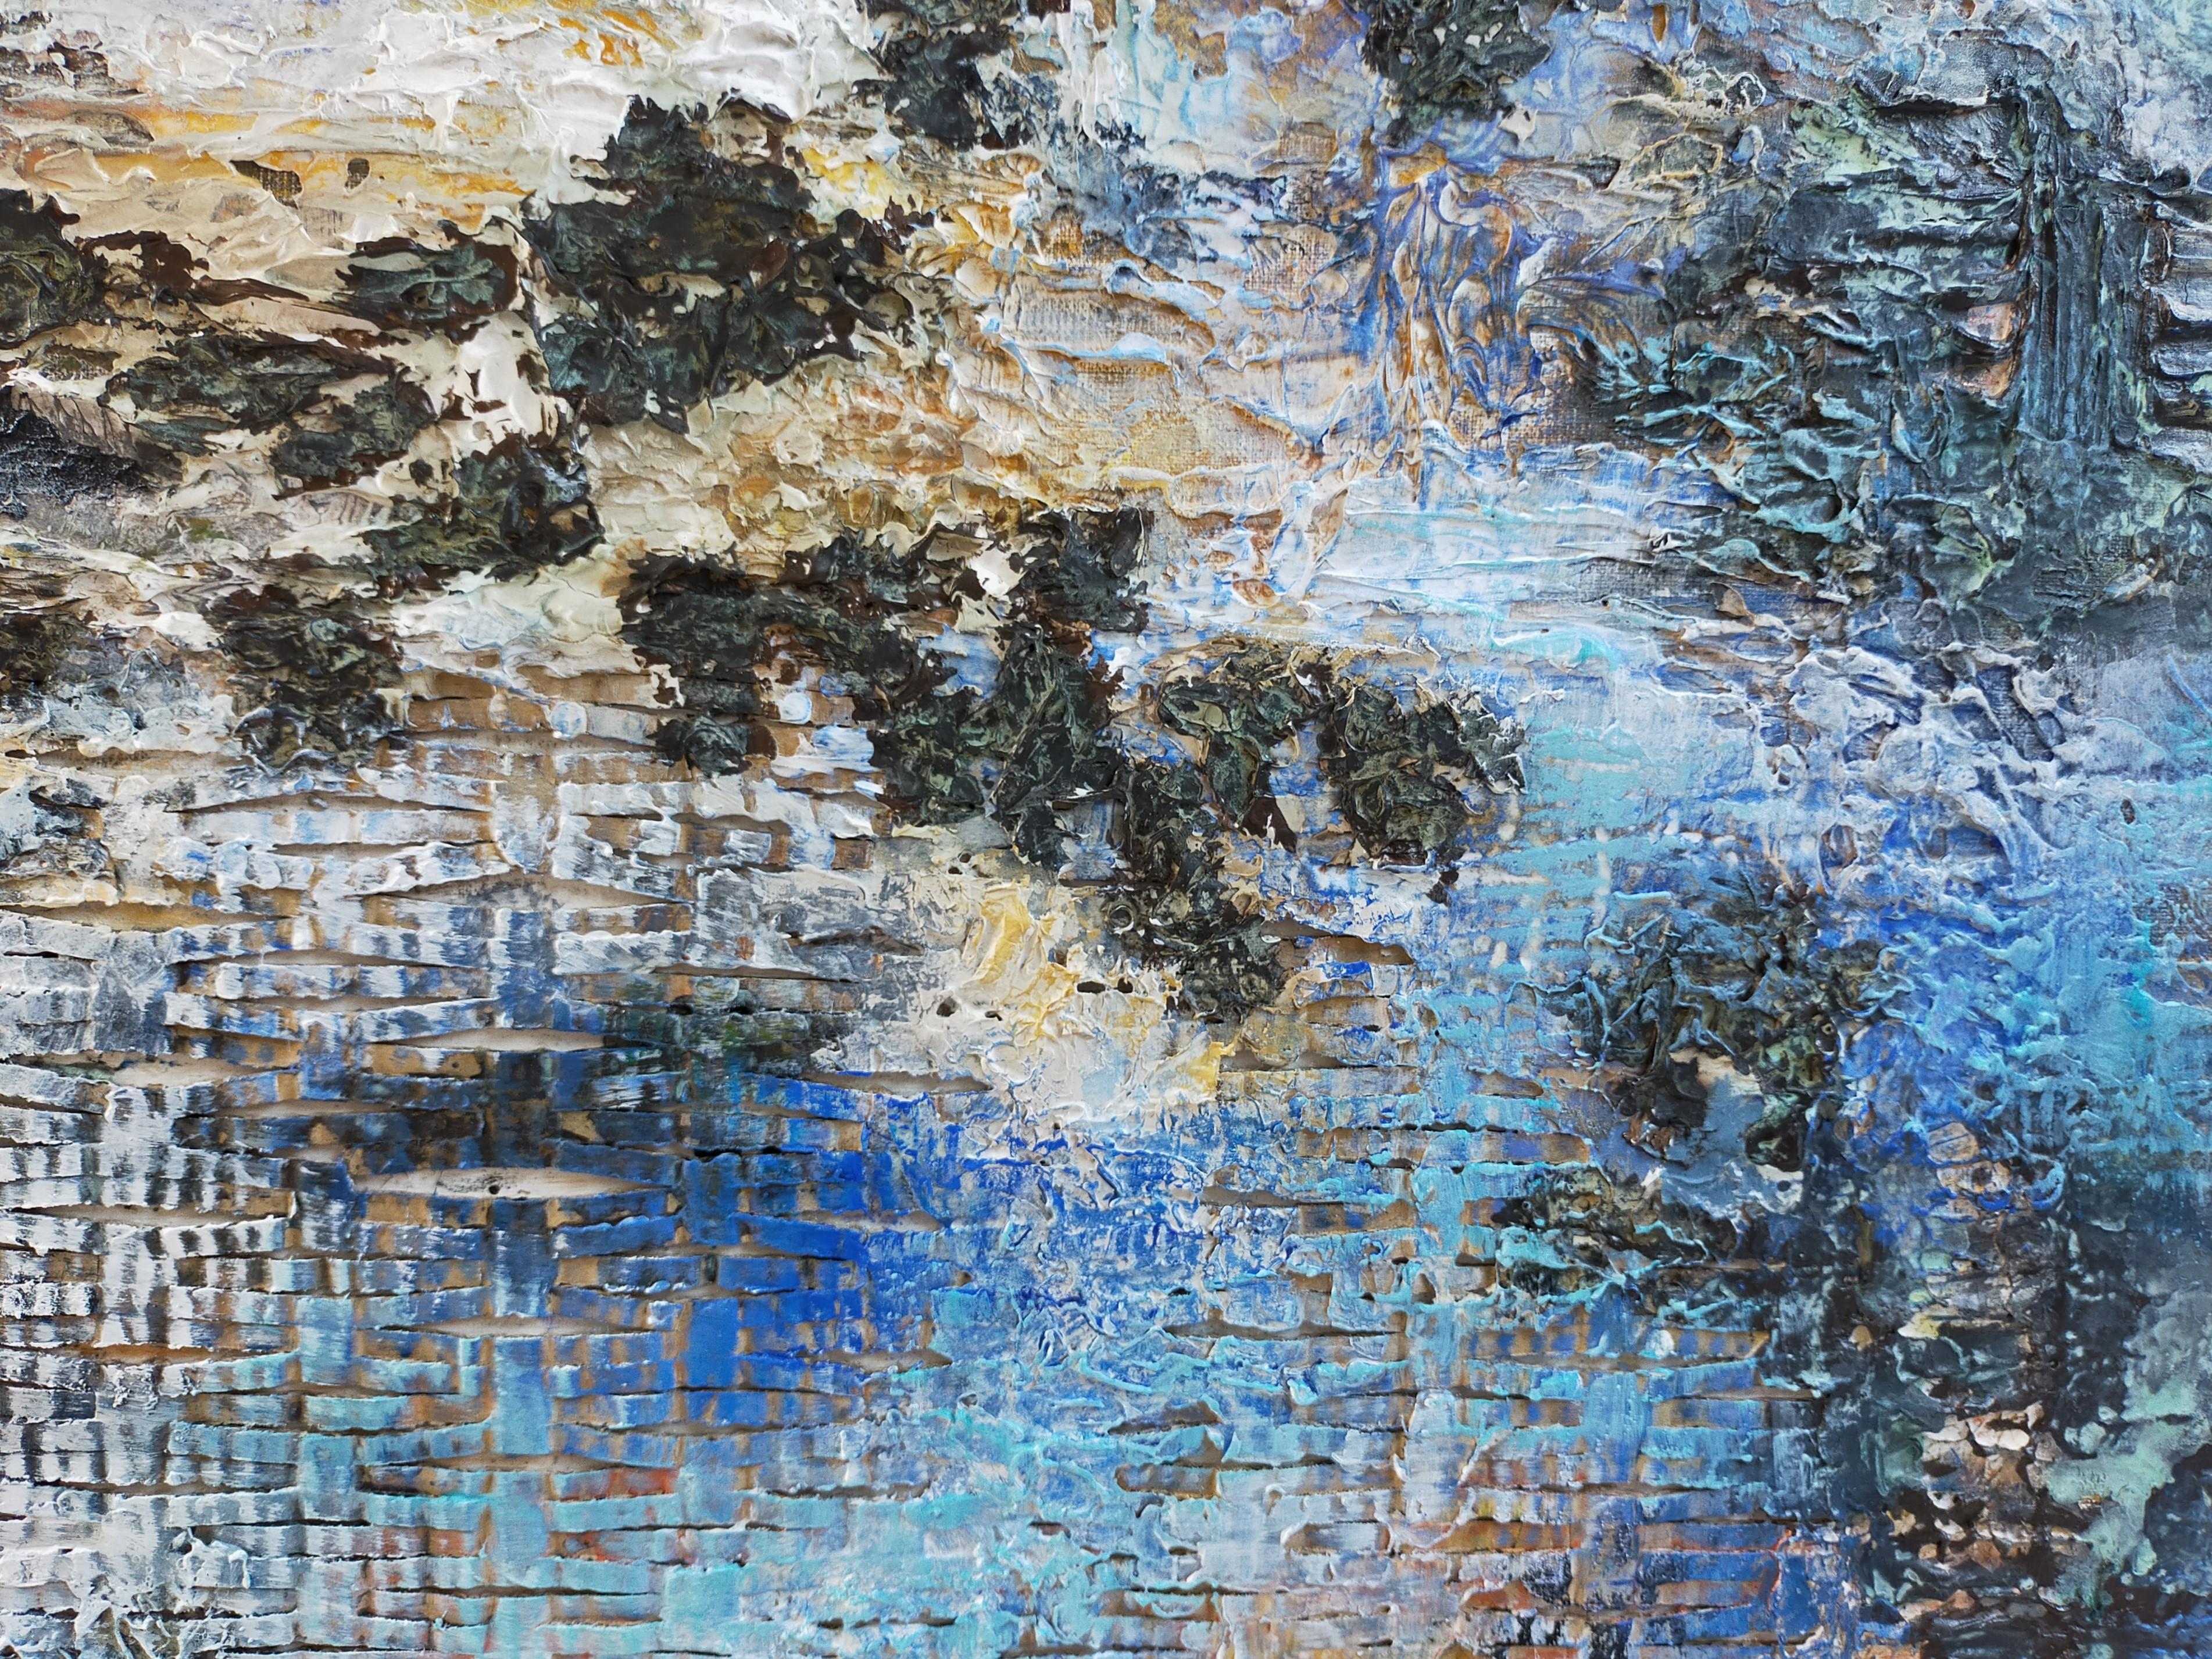 « The salty air of roscoff », oxydation acrylique abstraite sur toile de lin 100x80cm en vente 2